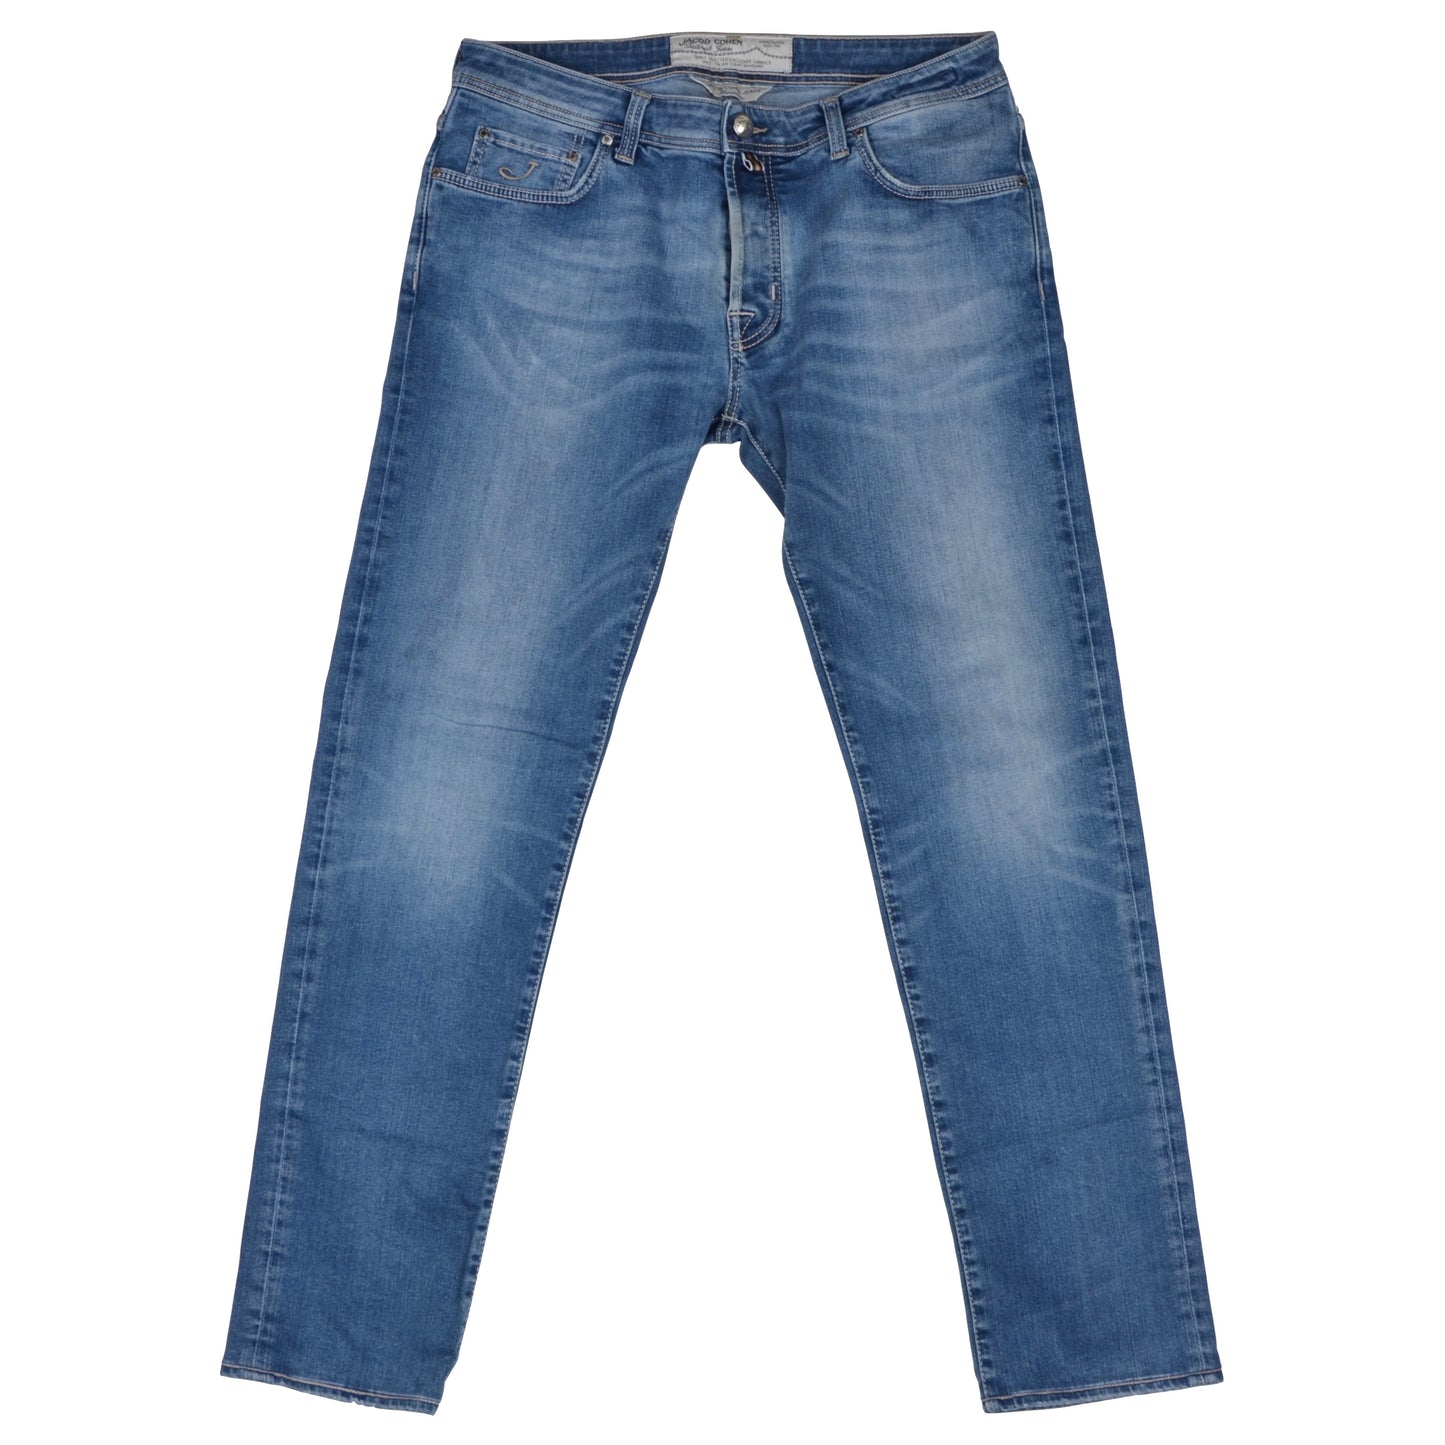 Jacob Cohen Jeans Modell 688 C Größe W36 Slim Stretch